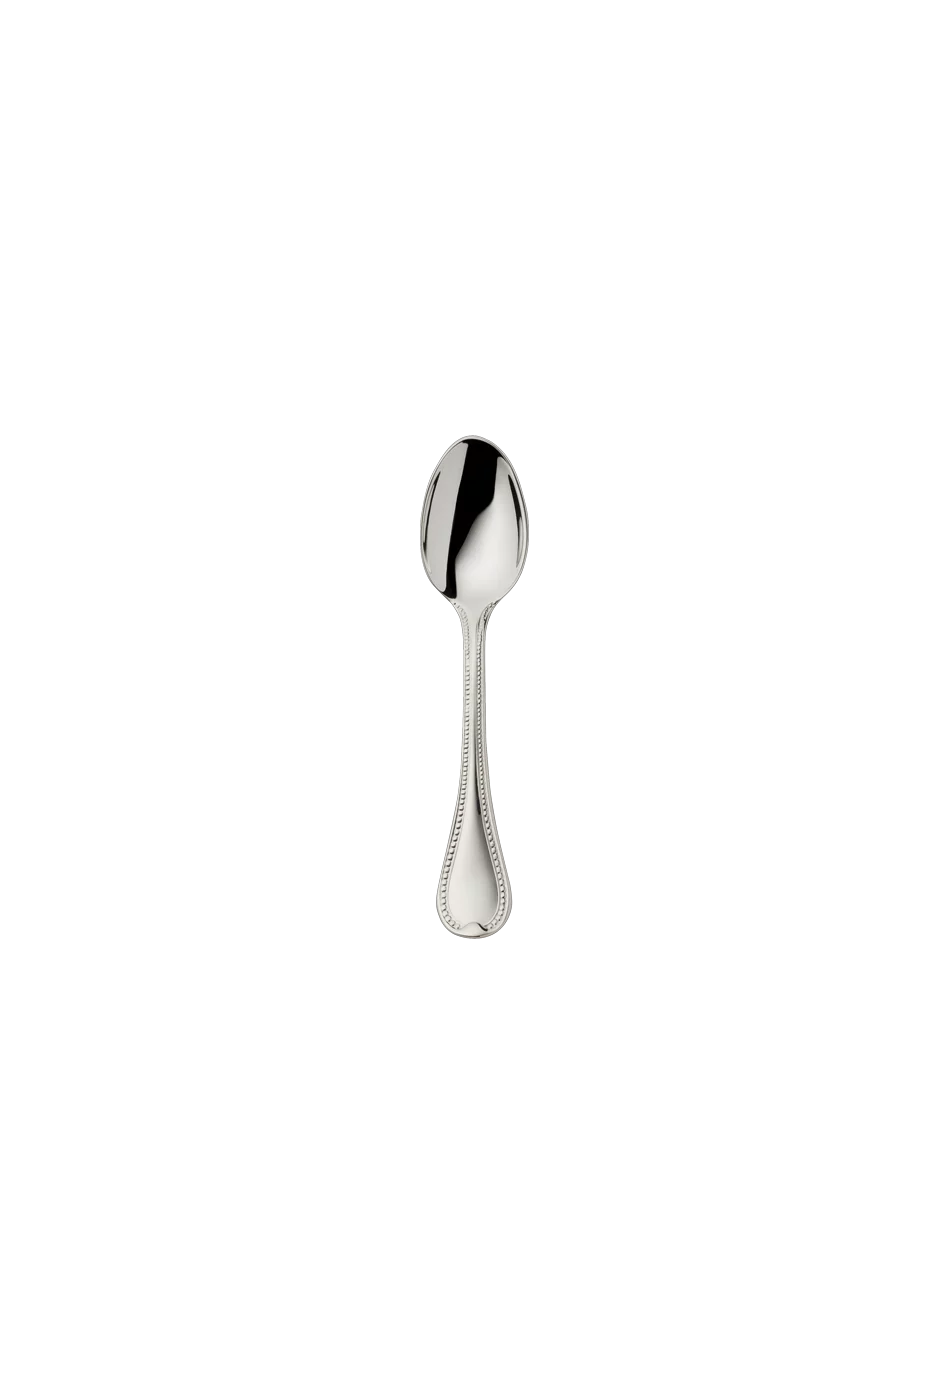 Französisch-Perl Mocha Spoon 10, 5 Cms (925 Sterling Silver)